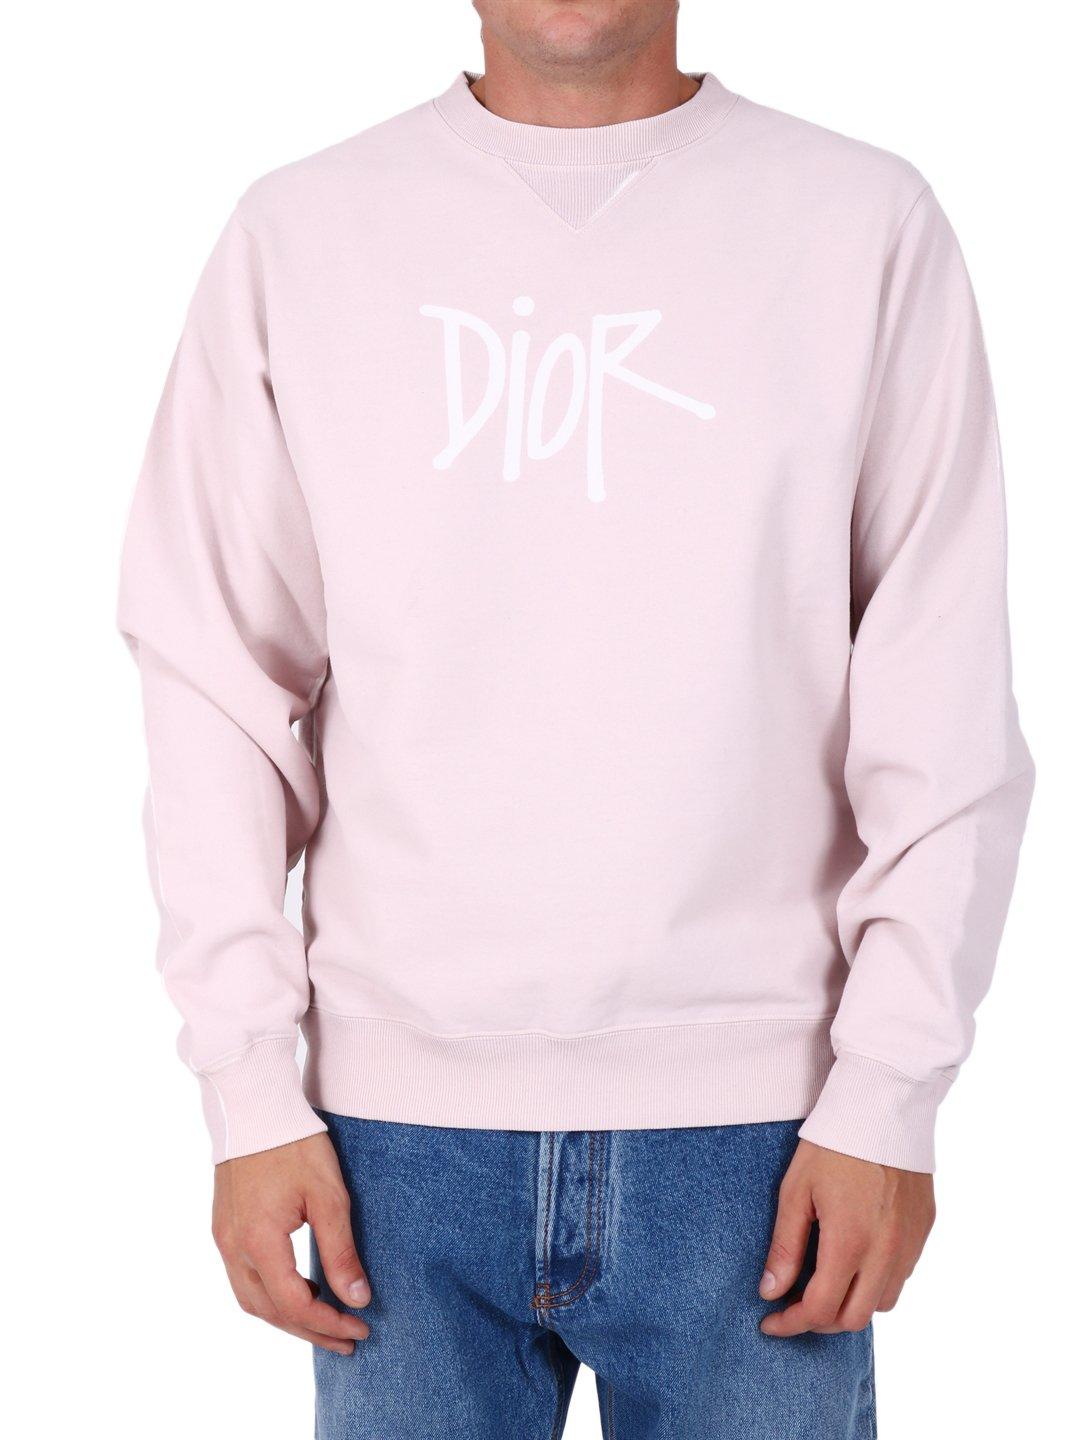 Dior Fleece Sweatshirt Dior And Shawn Pink for Men - Lyst